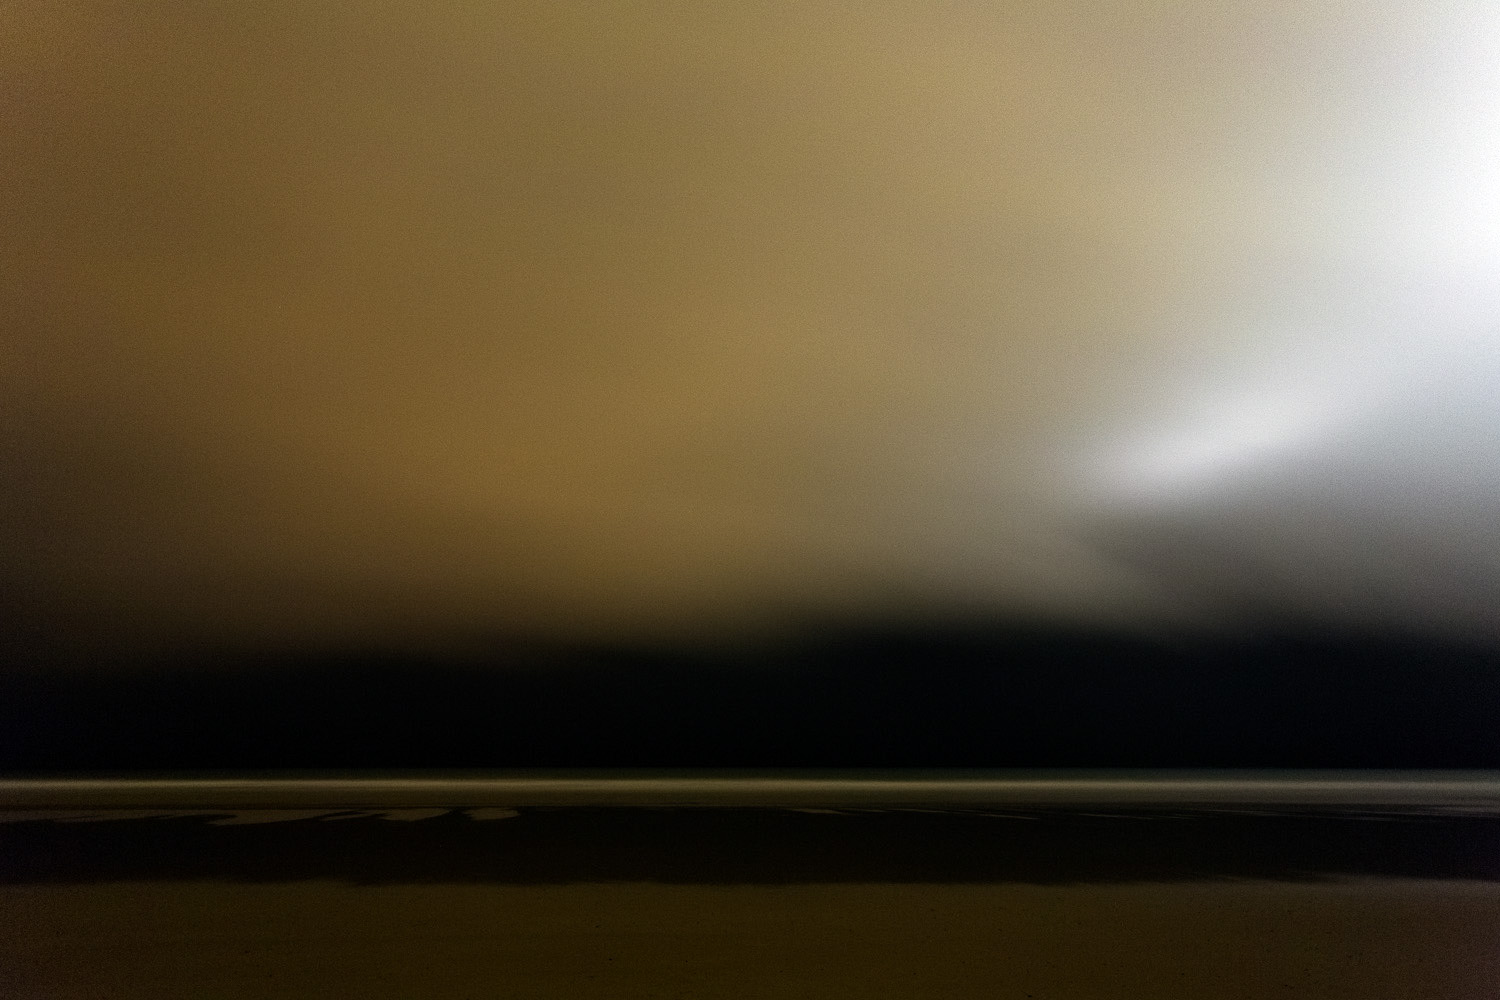 Dark night sky surf beach Inverloch